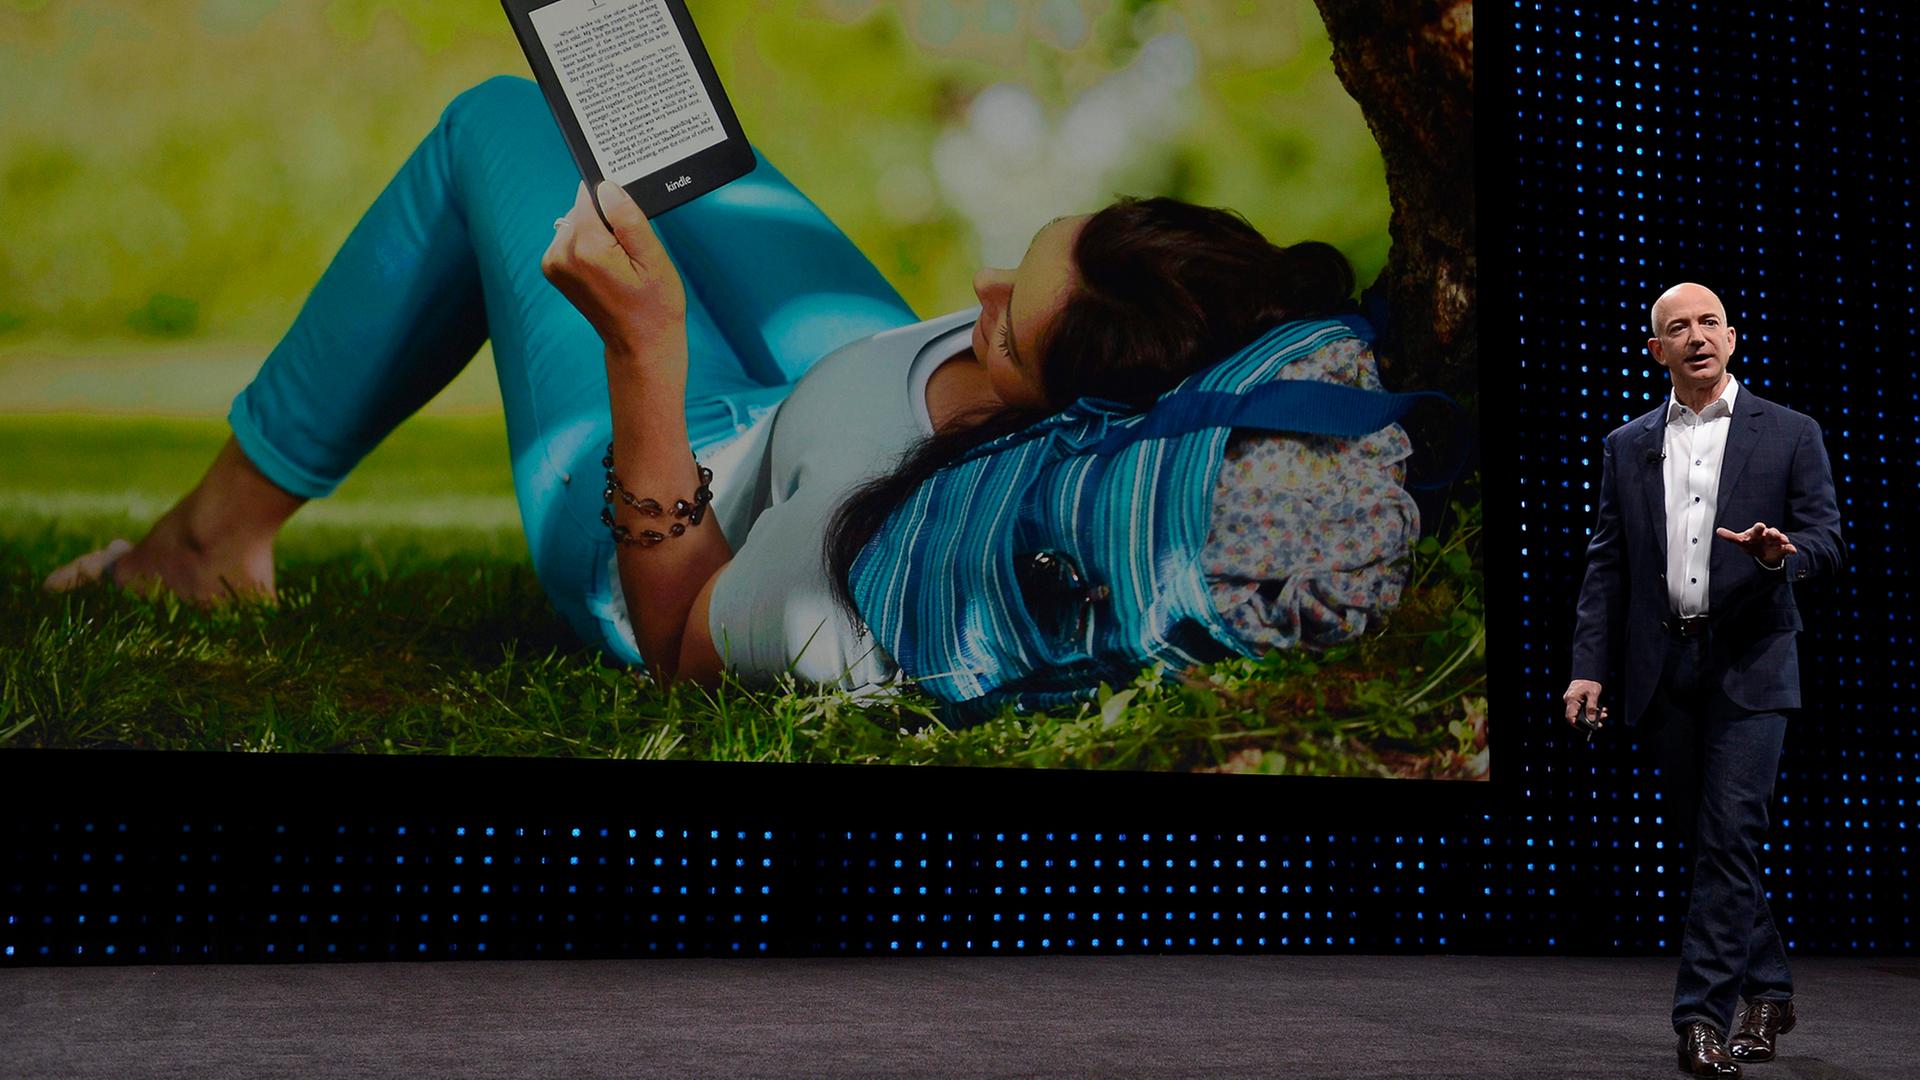 2012 stellte Amazon-Chef Jeff Bezos das neue "Amazon Kindle" vor.